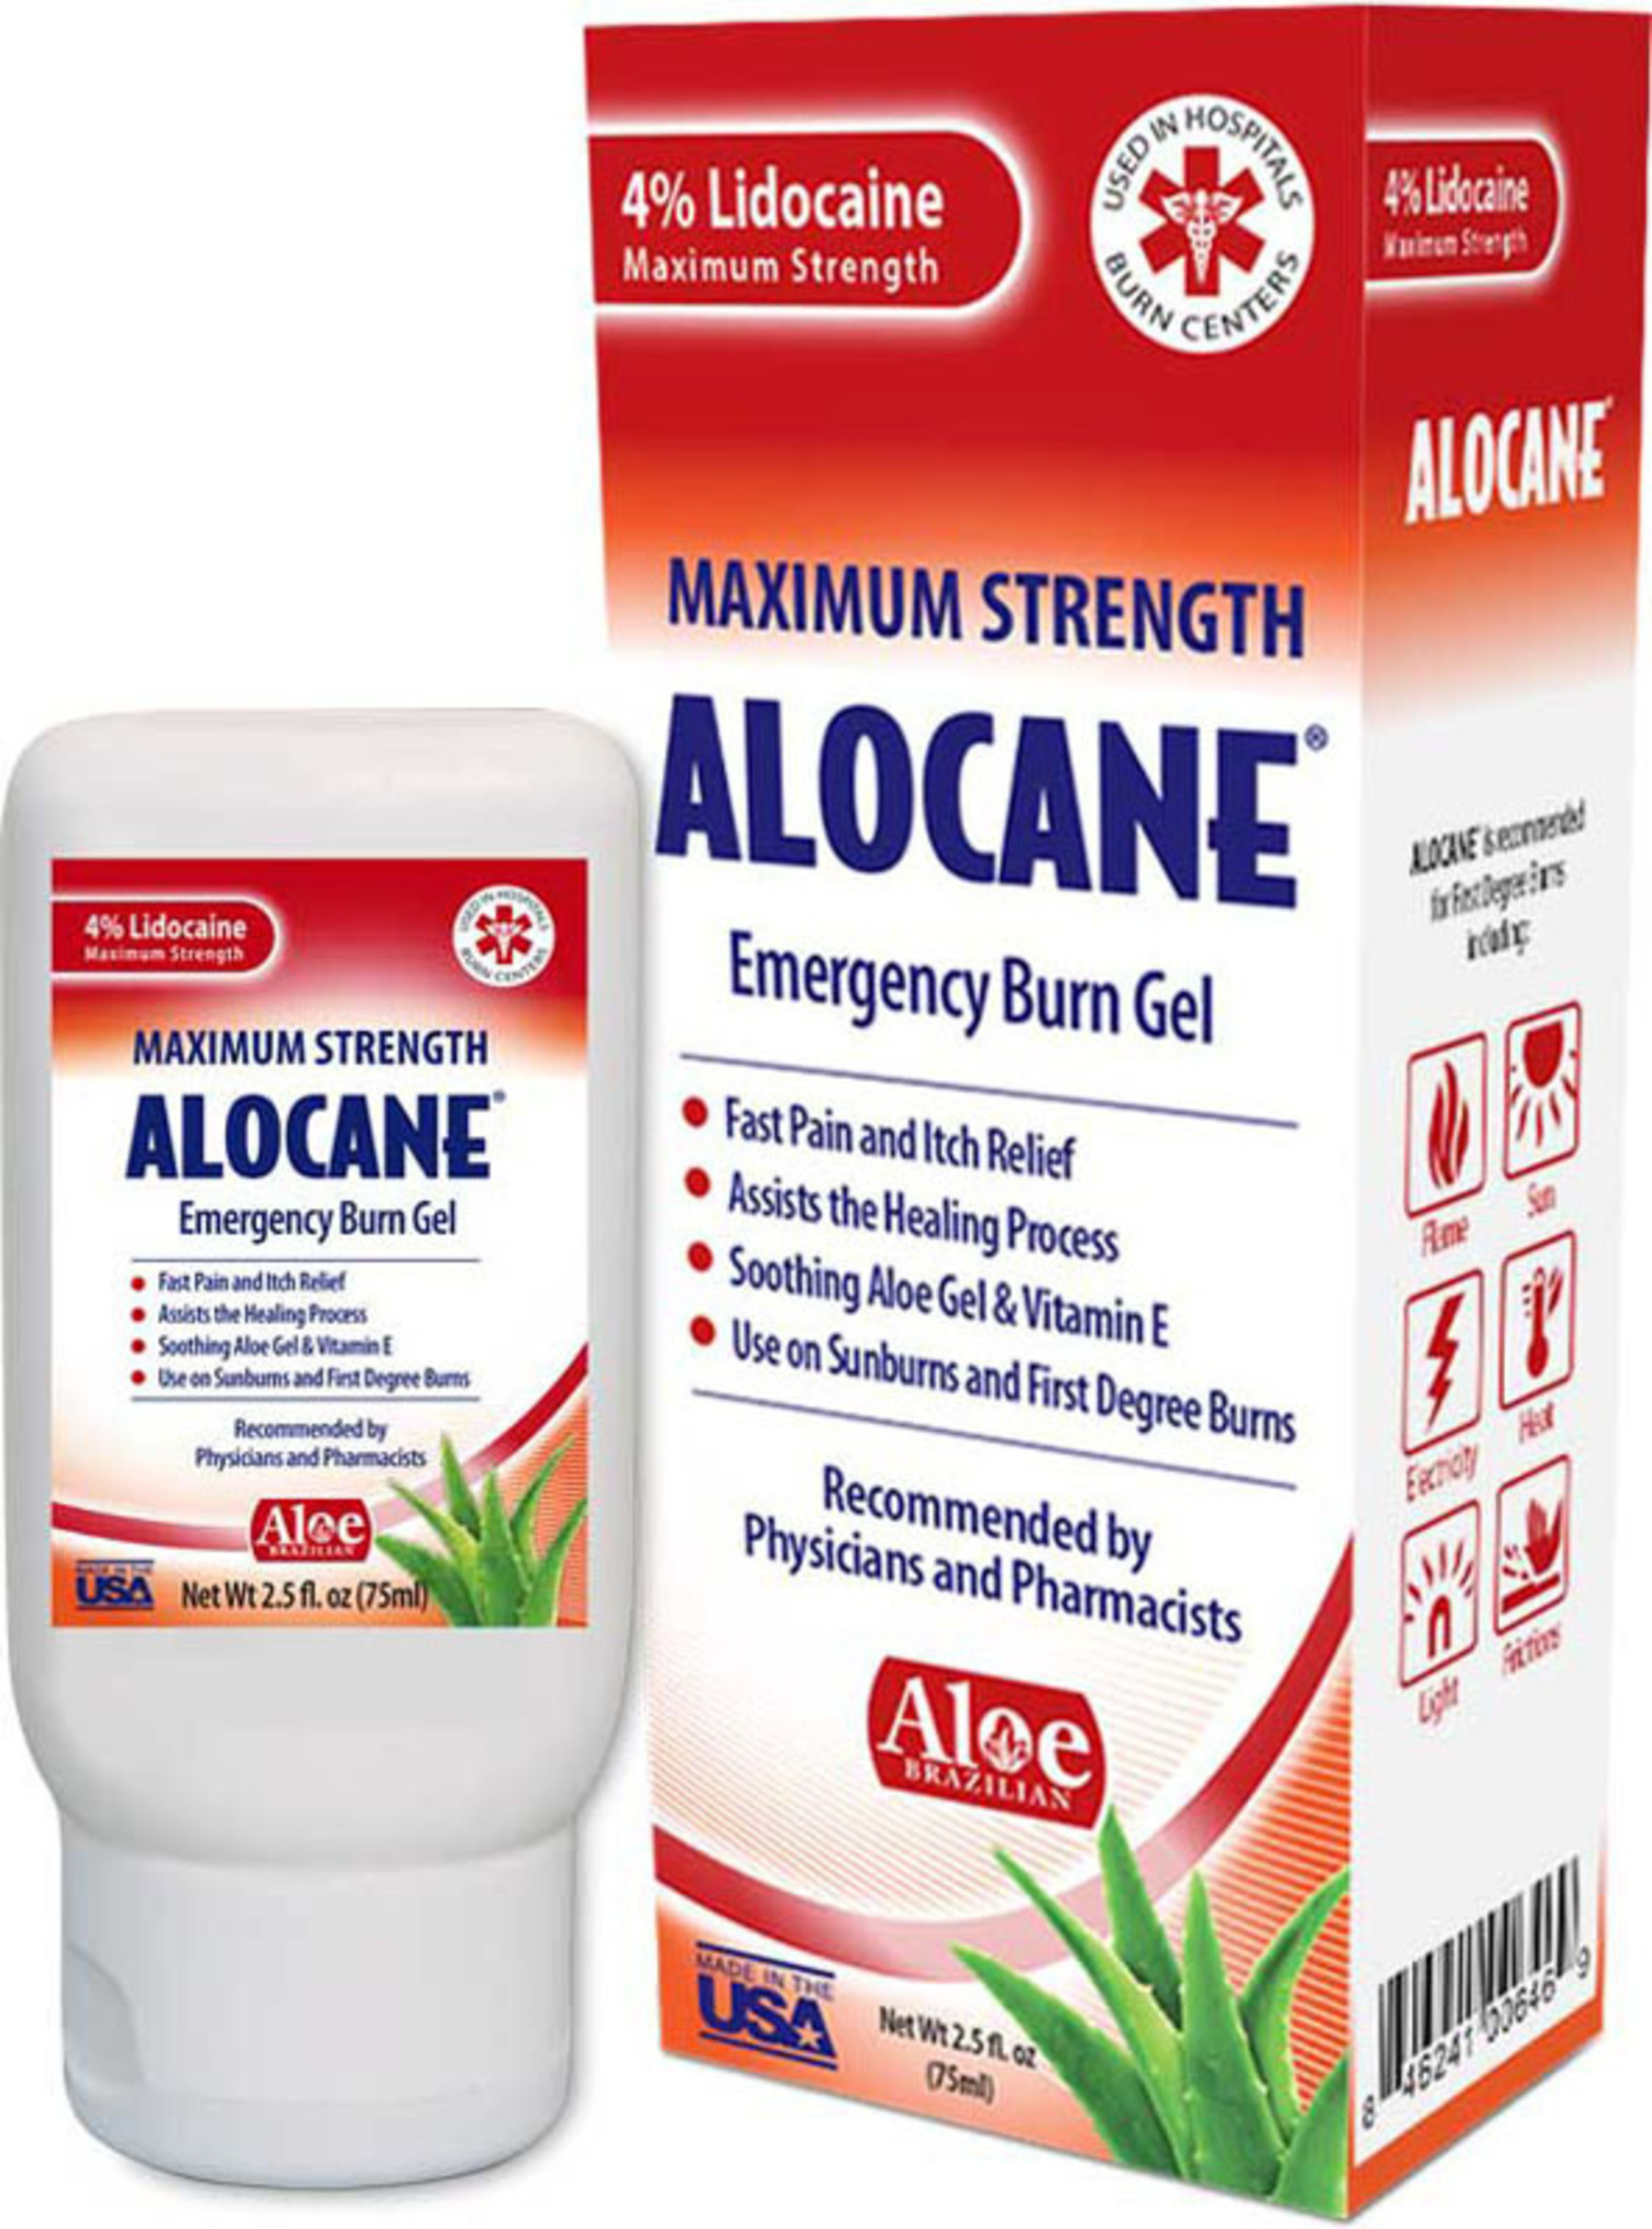 Alocane Product Box. (PRNewsFoto/Quest Products) (PRNewsFoto/QUEST PRODUCTS)